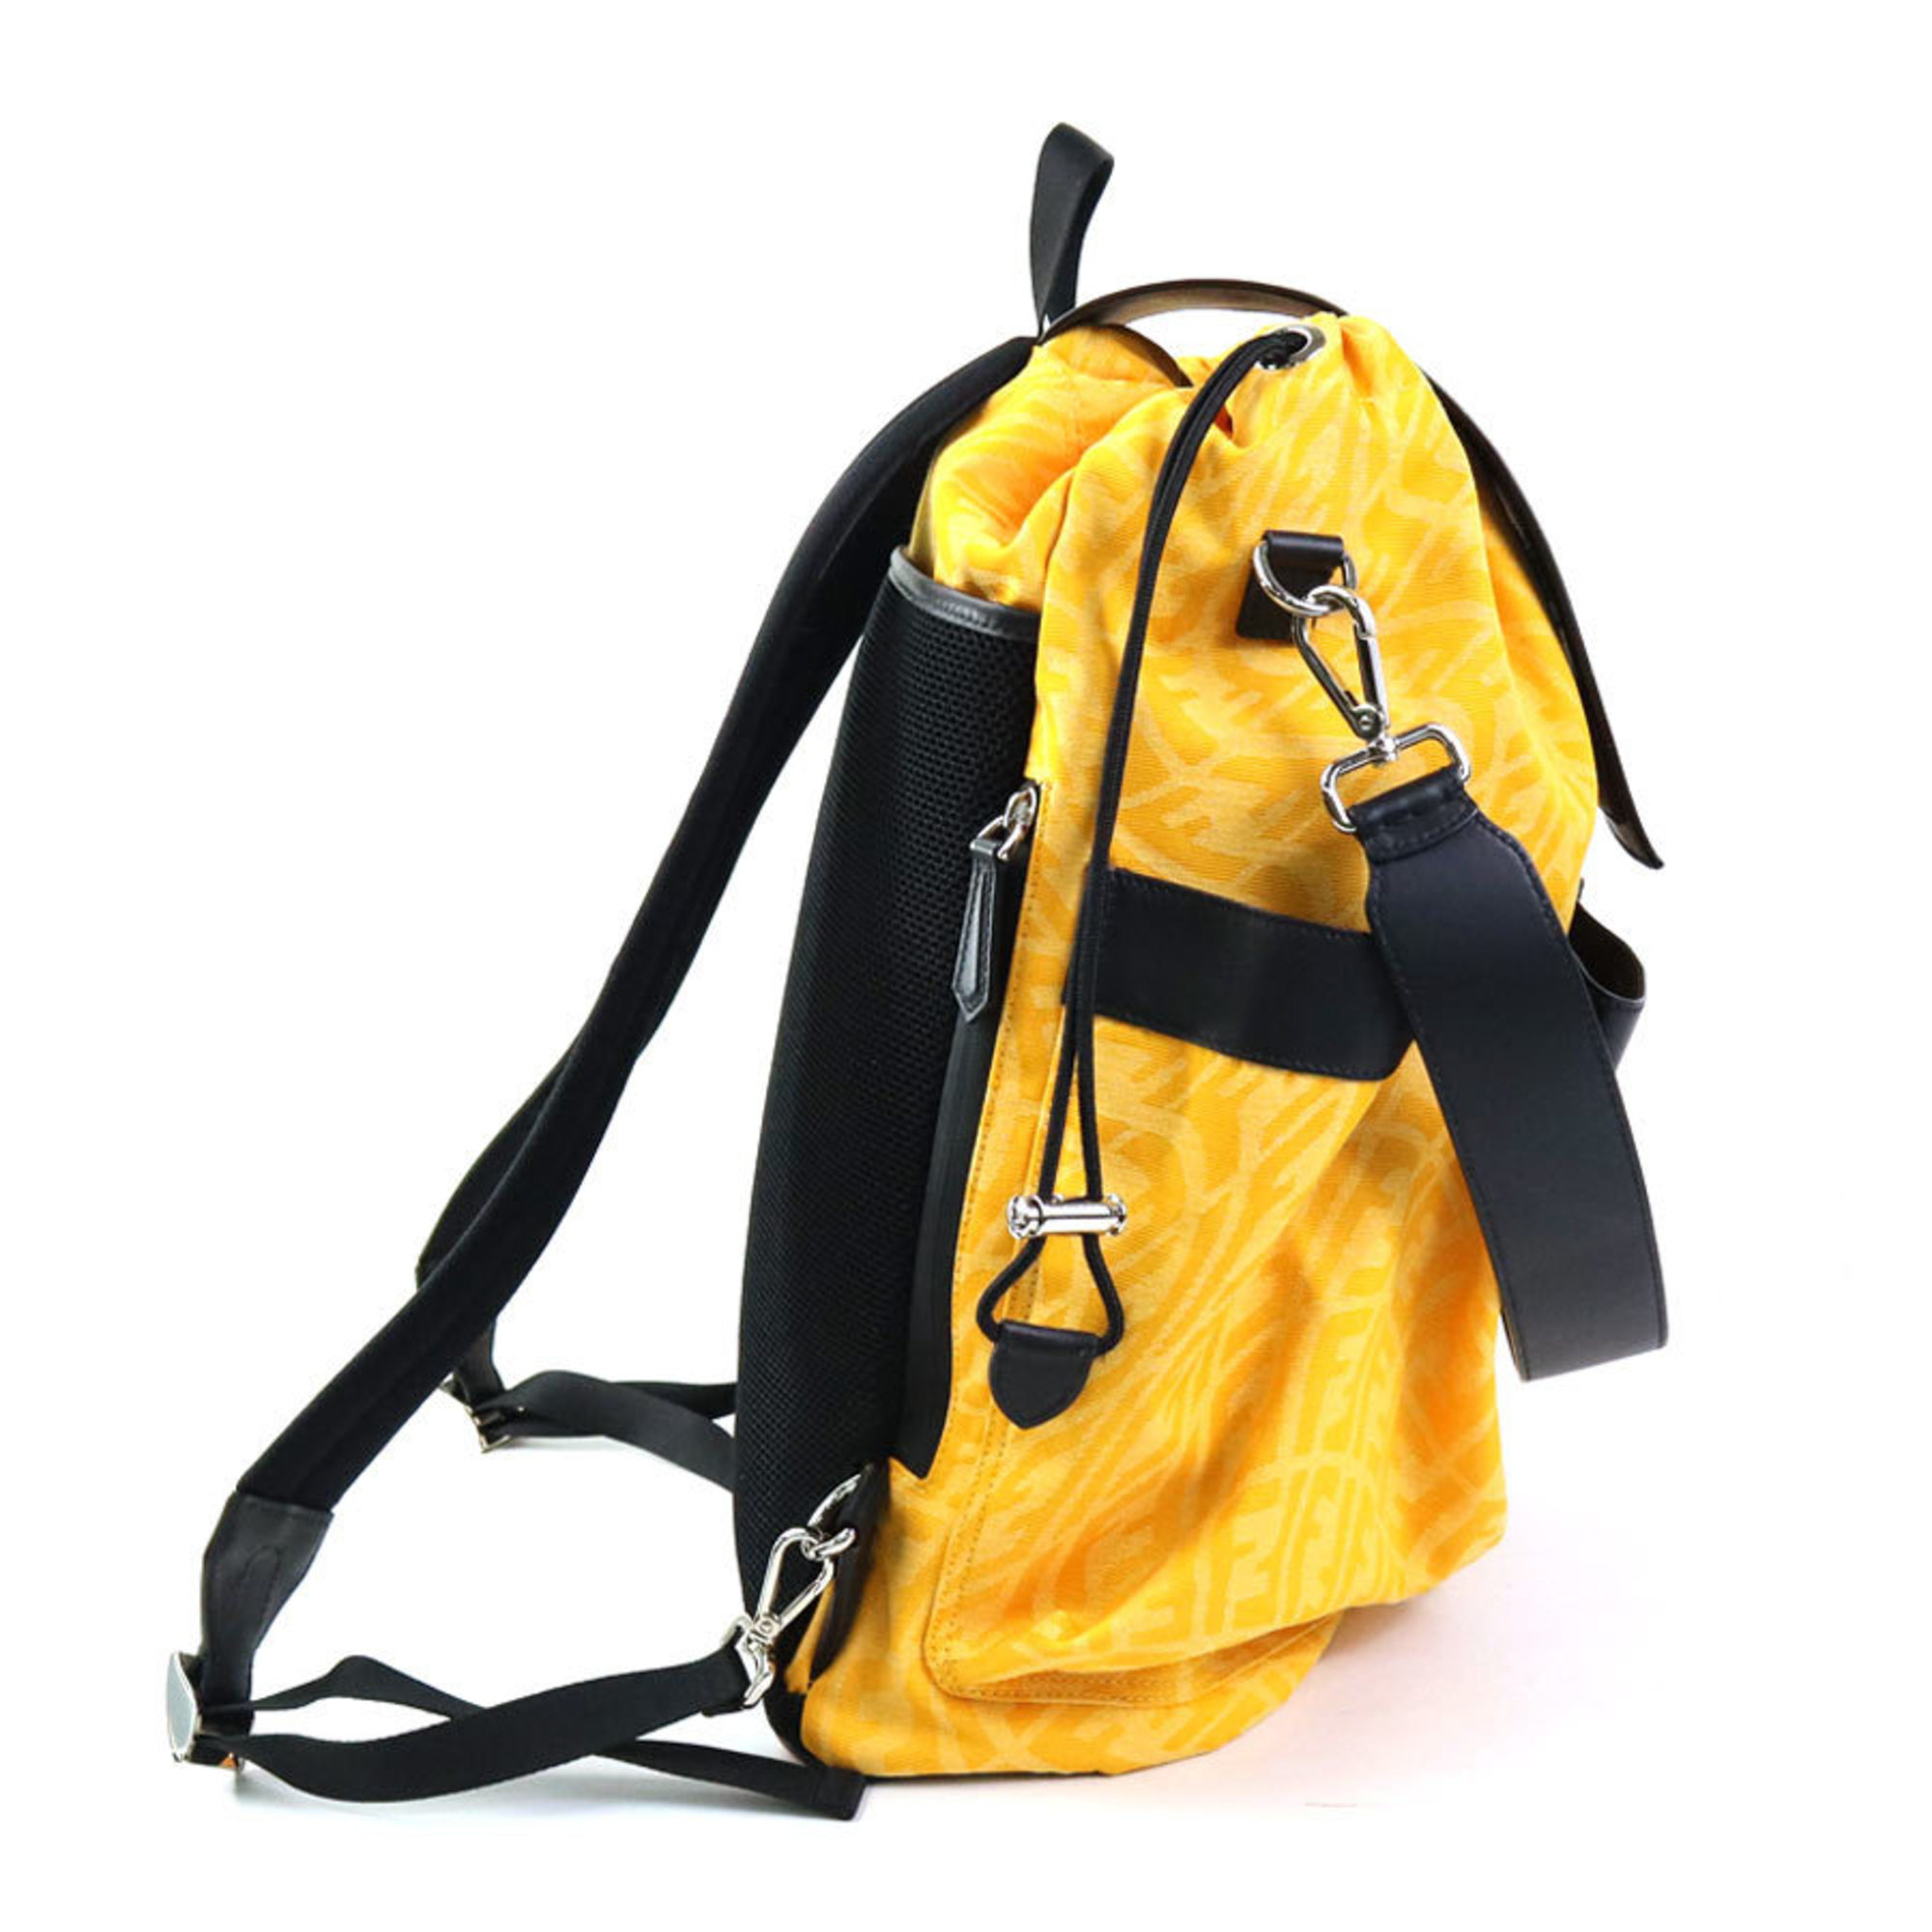 FENDI Backpack Canvas Yellow x Black Men's 7VZ056 AG 99910j